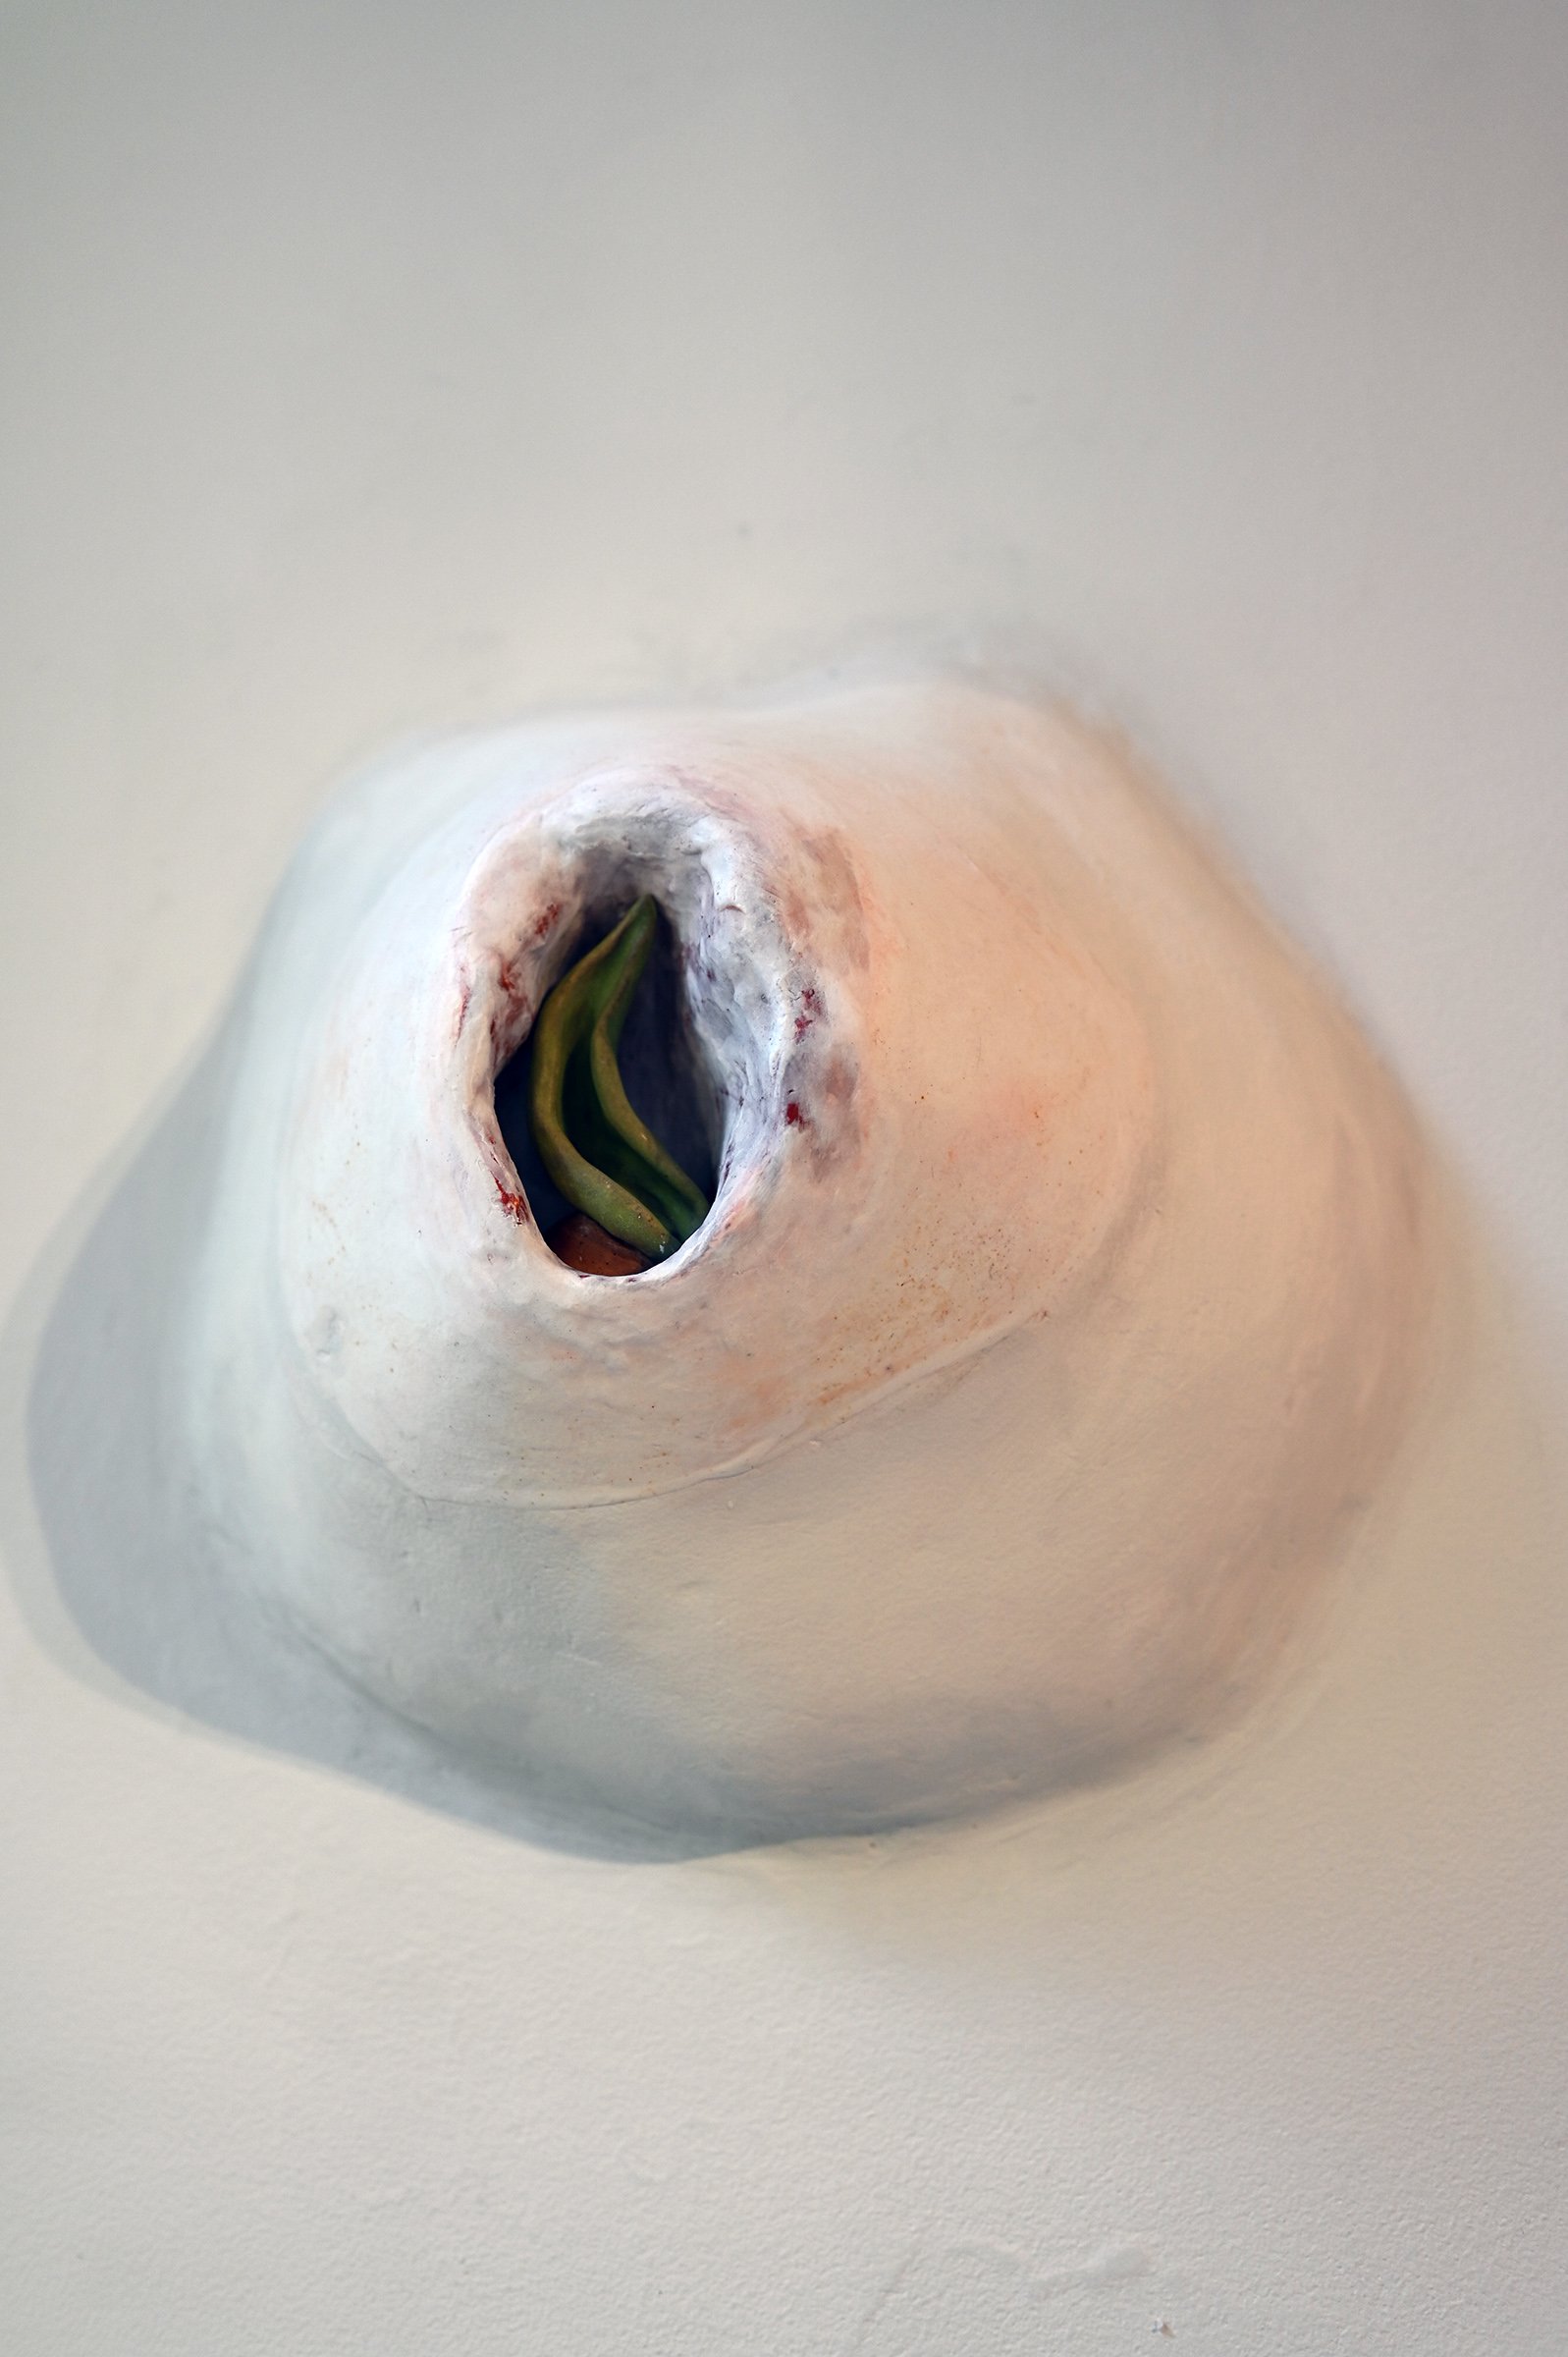  Nicki Cherry “Trepans”, 2021 Each approximately 8" x 5" x 4" Plaster, polystyrene, paint, wax, aromachemicals, paint, glazed ceramic stoneware   